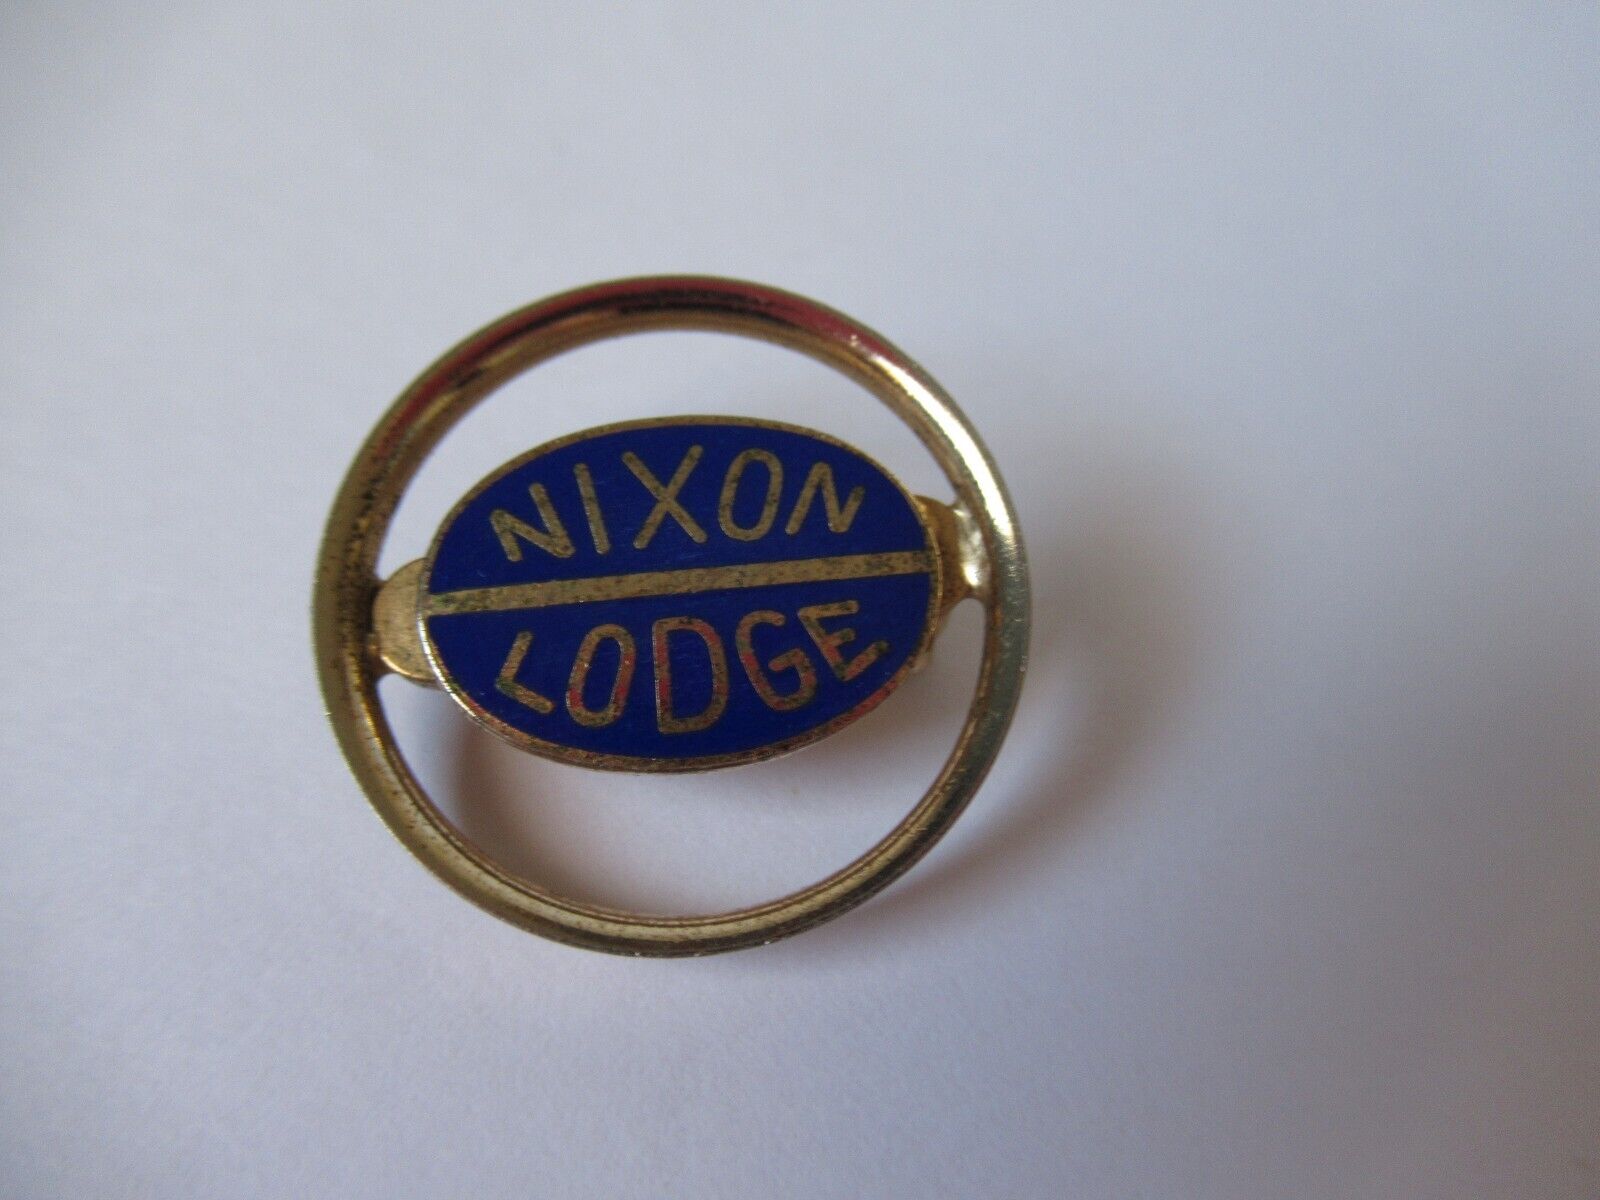 Richard Nixon Henry Cabot Lodge campaign pin Vintage Political Brooch Warner